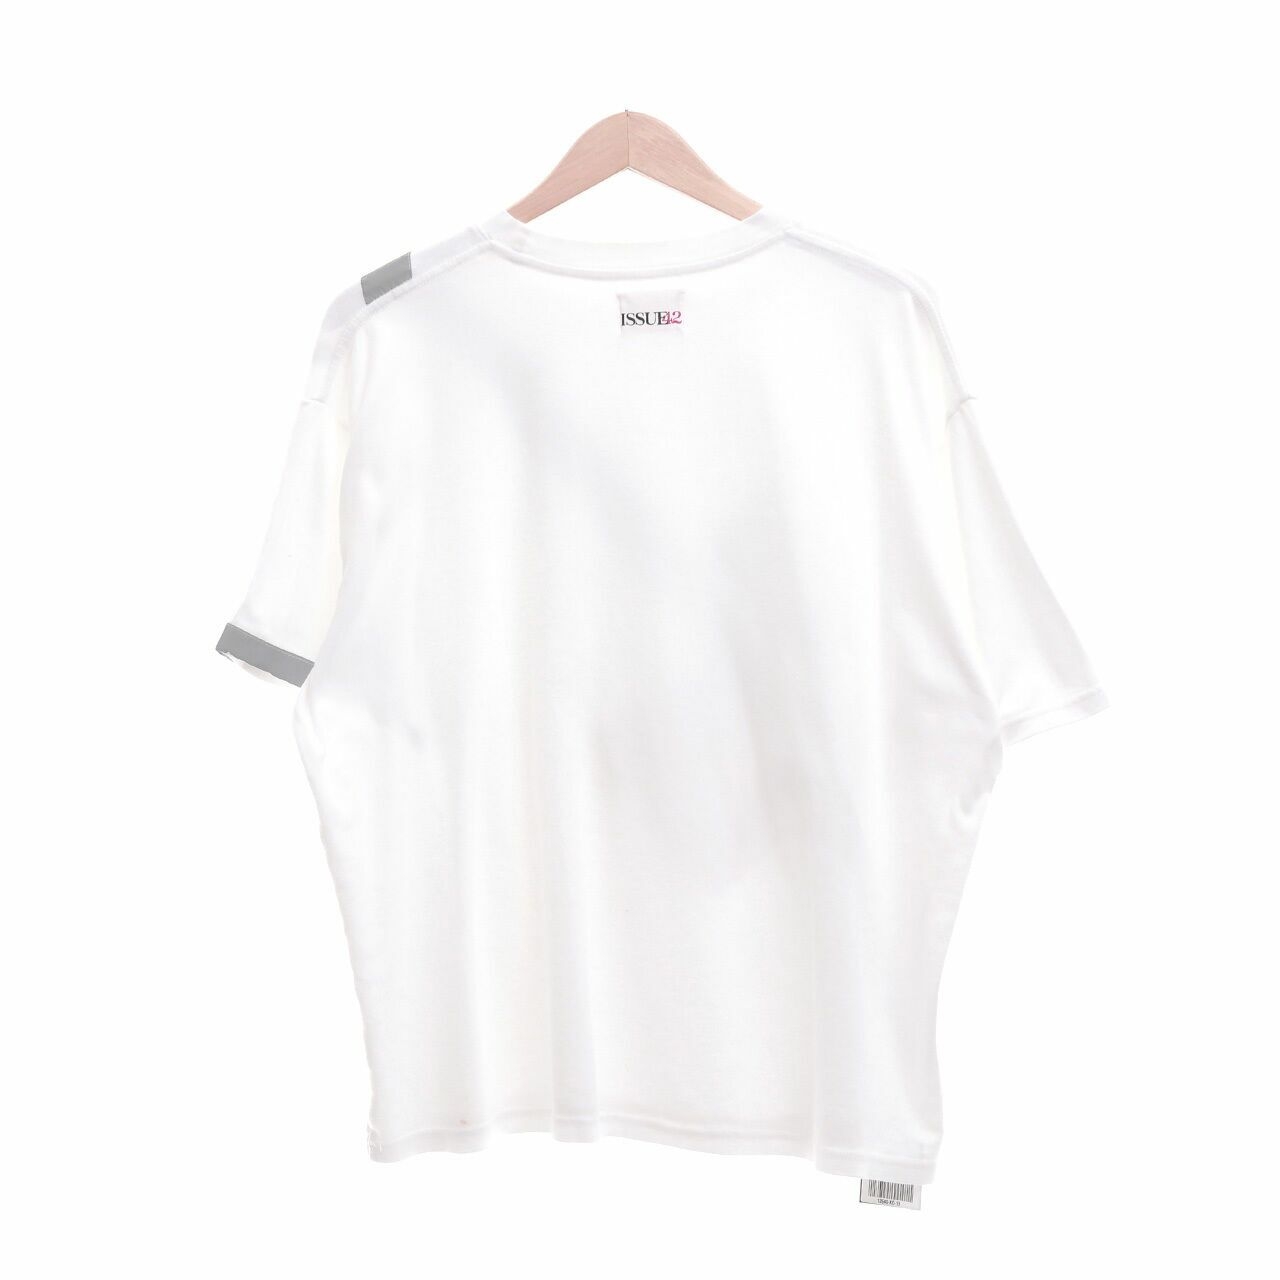 issue42 White T-Shirt